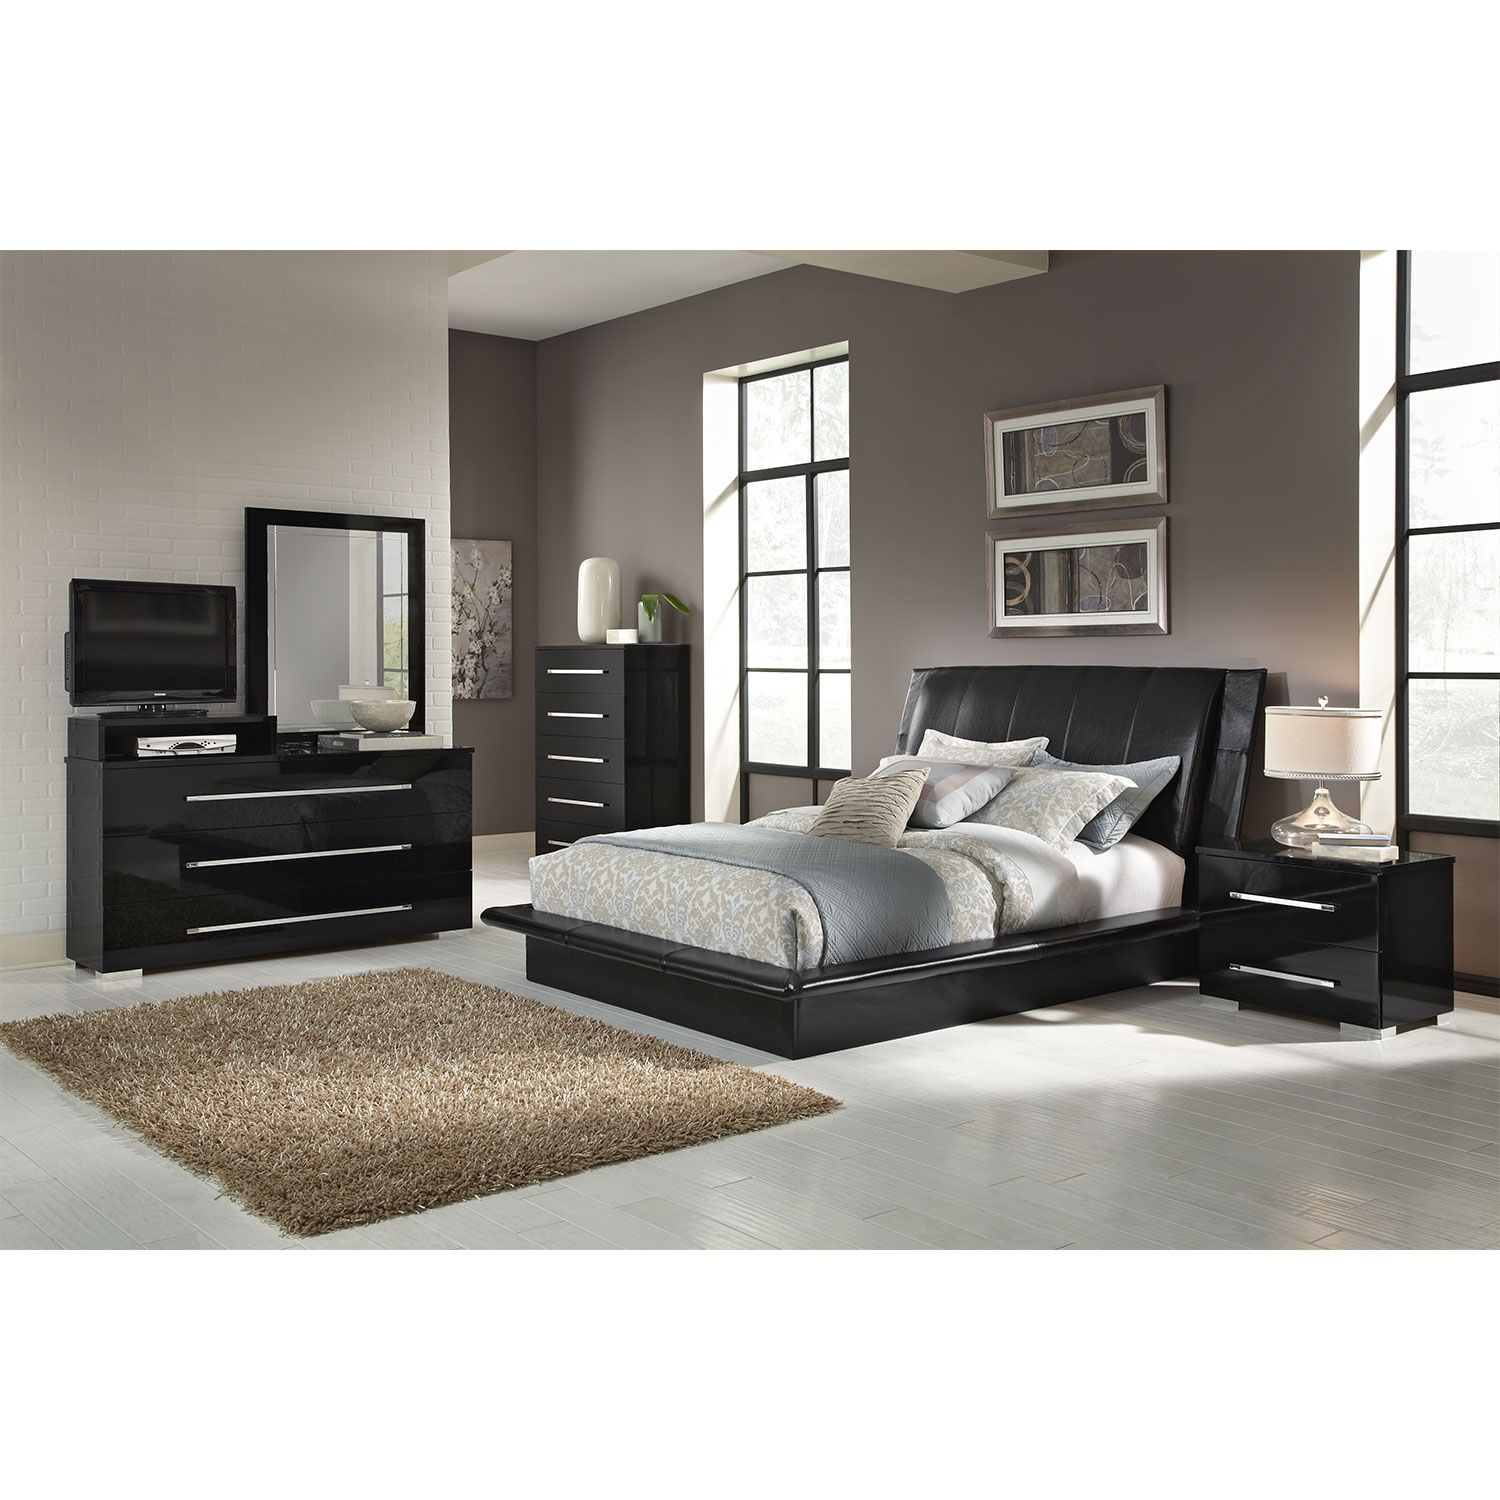 Bedroom Furniture Dimora 7 Piece Queen Upholstered Bedroom Set intended for proportions 1500 X 1500